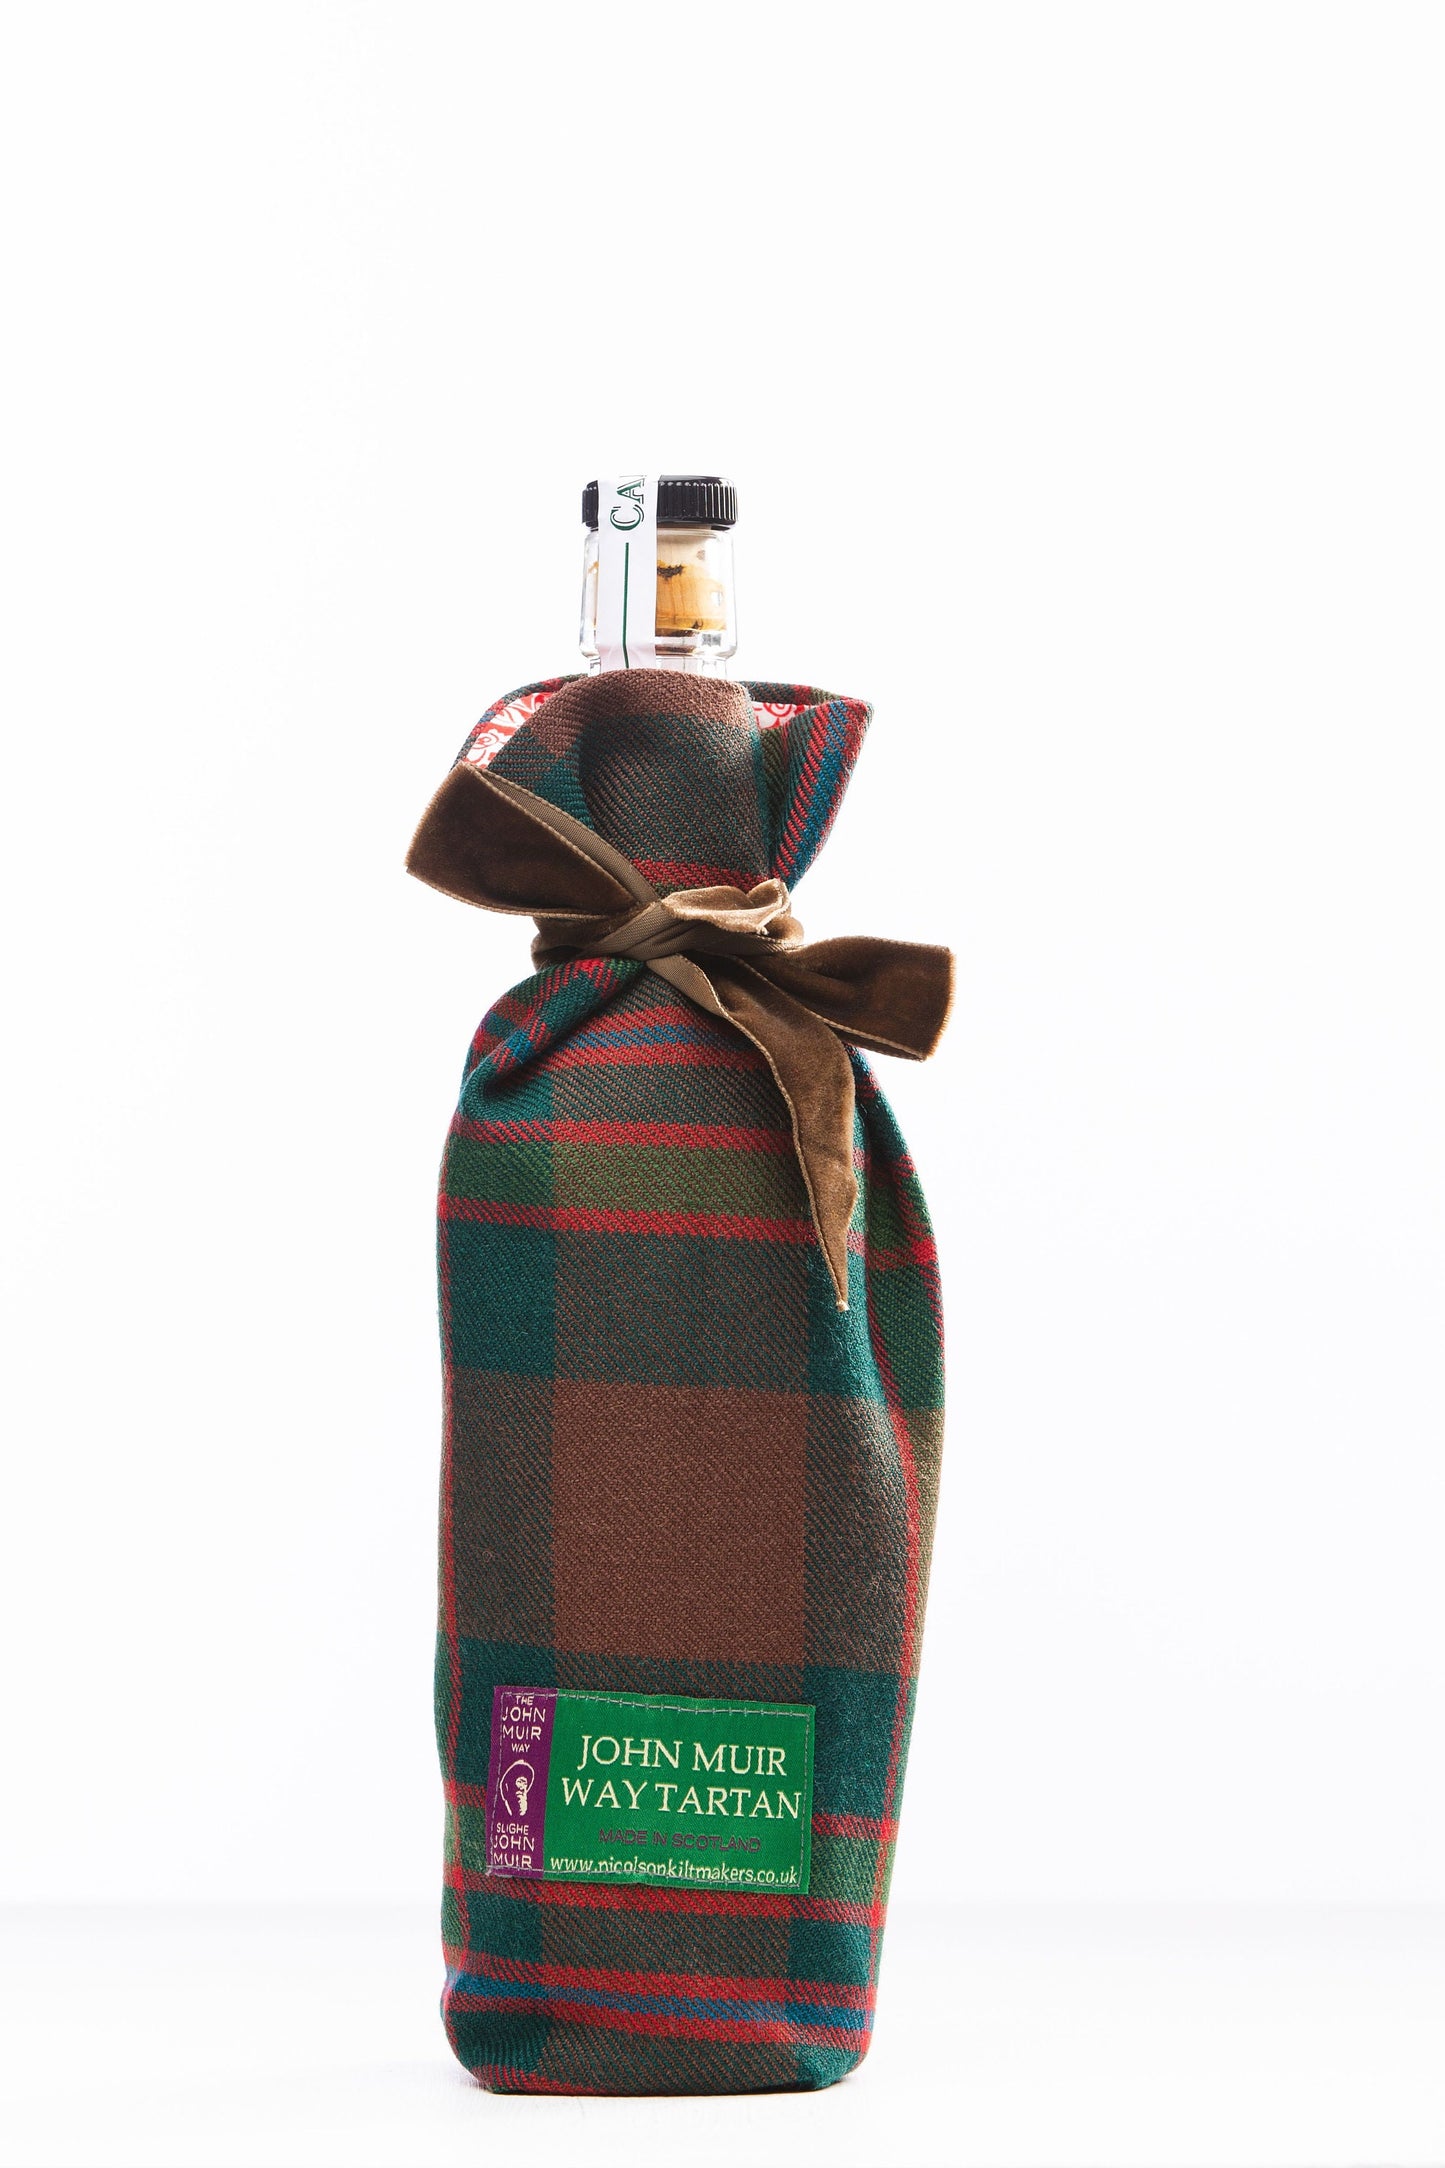 John Muir Way Tartan Luxury Scottish Bottle Bag made with Liberty Fabric Lining